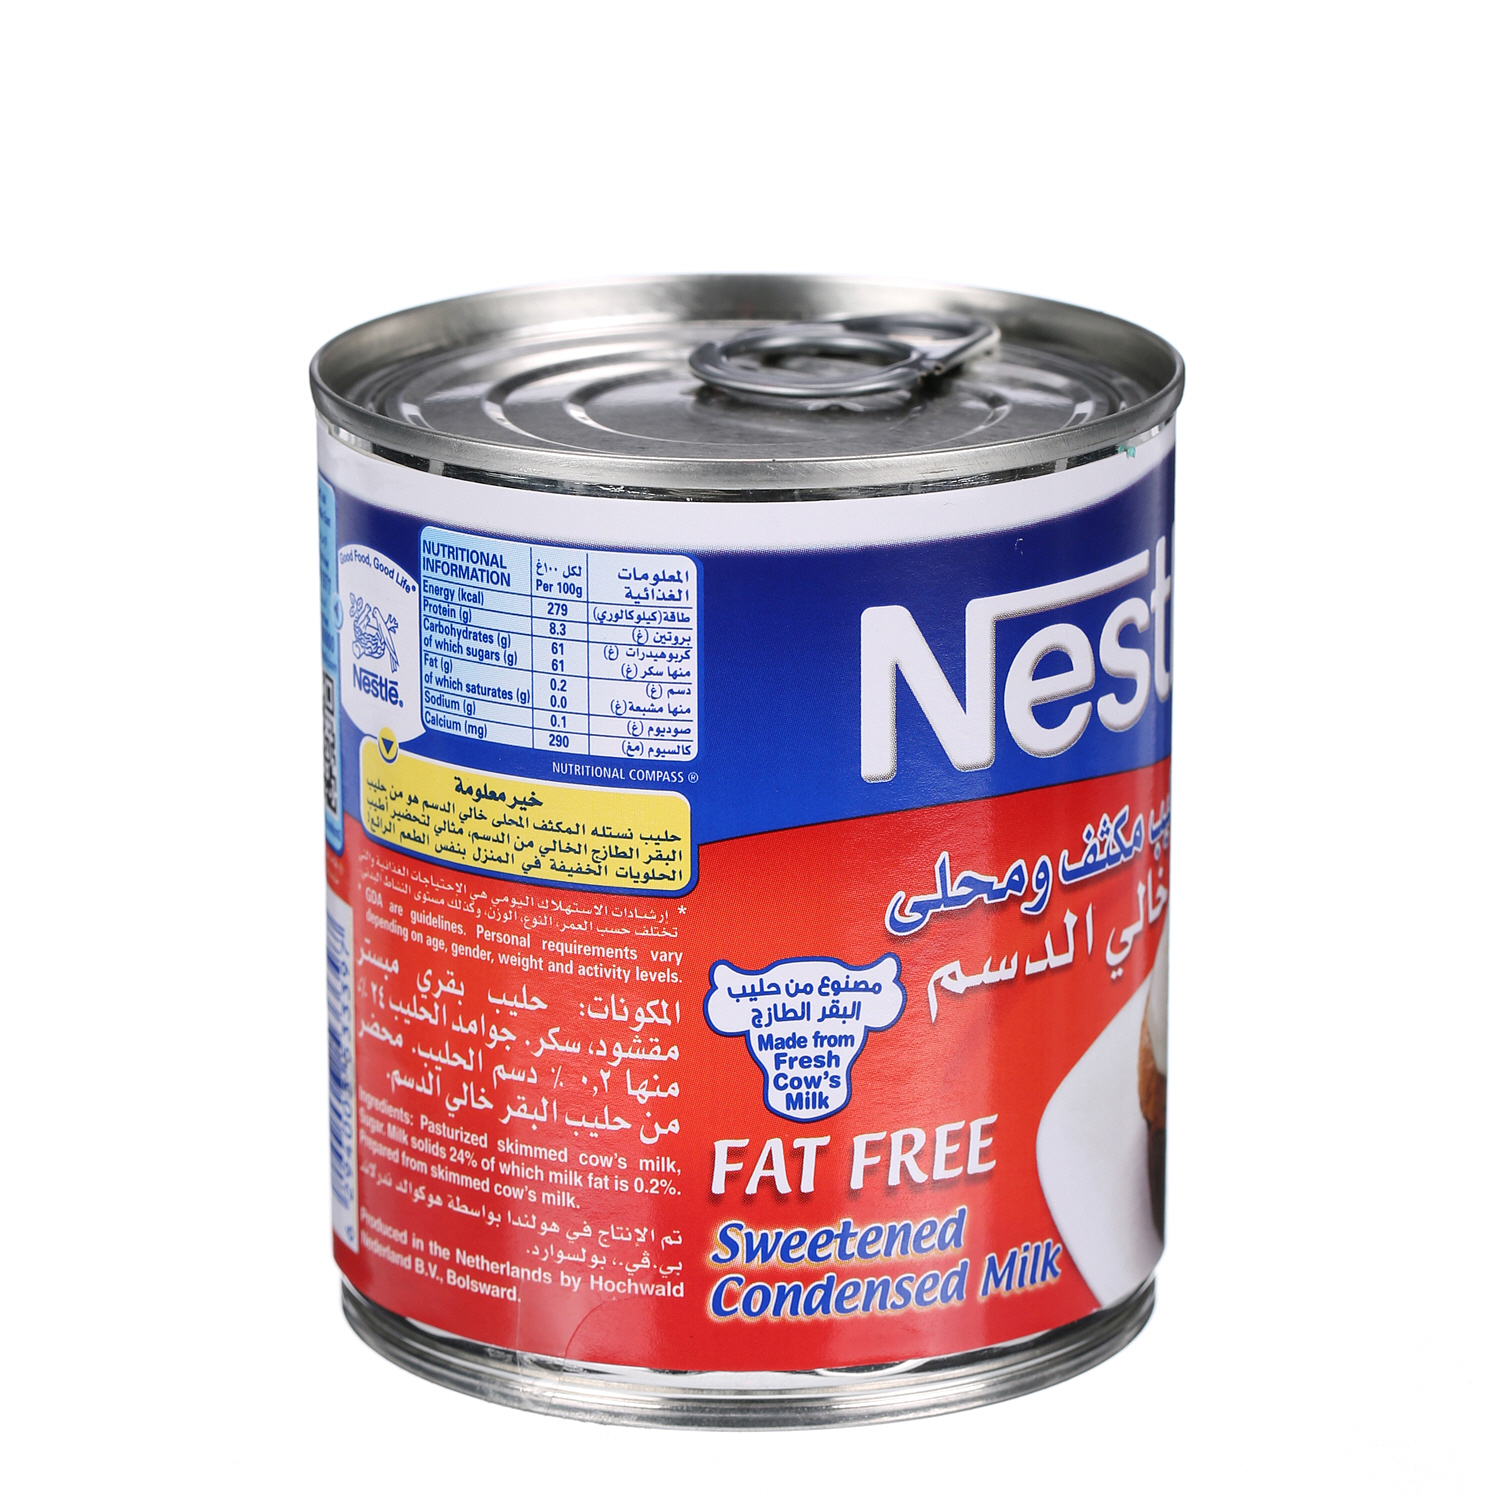 Nestlé Sweetened Condensed Milk Fat Free 405 g